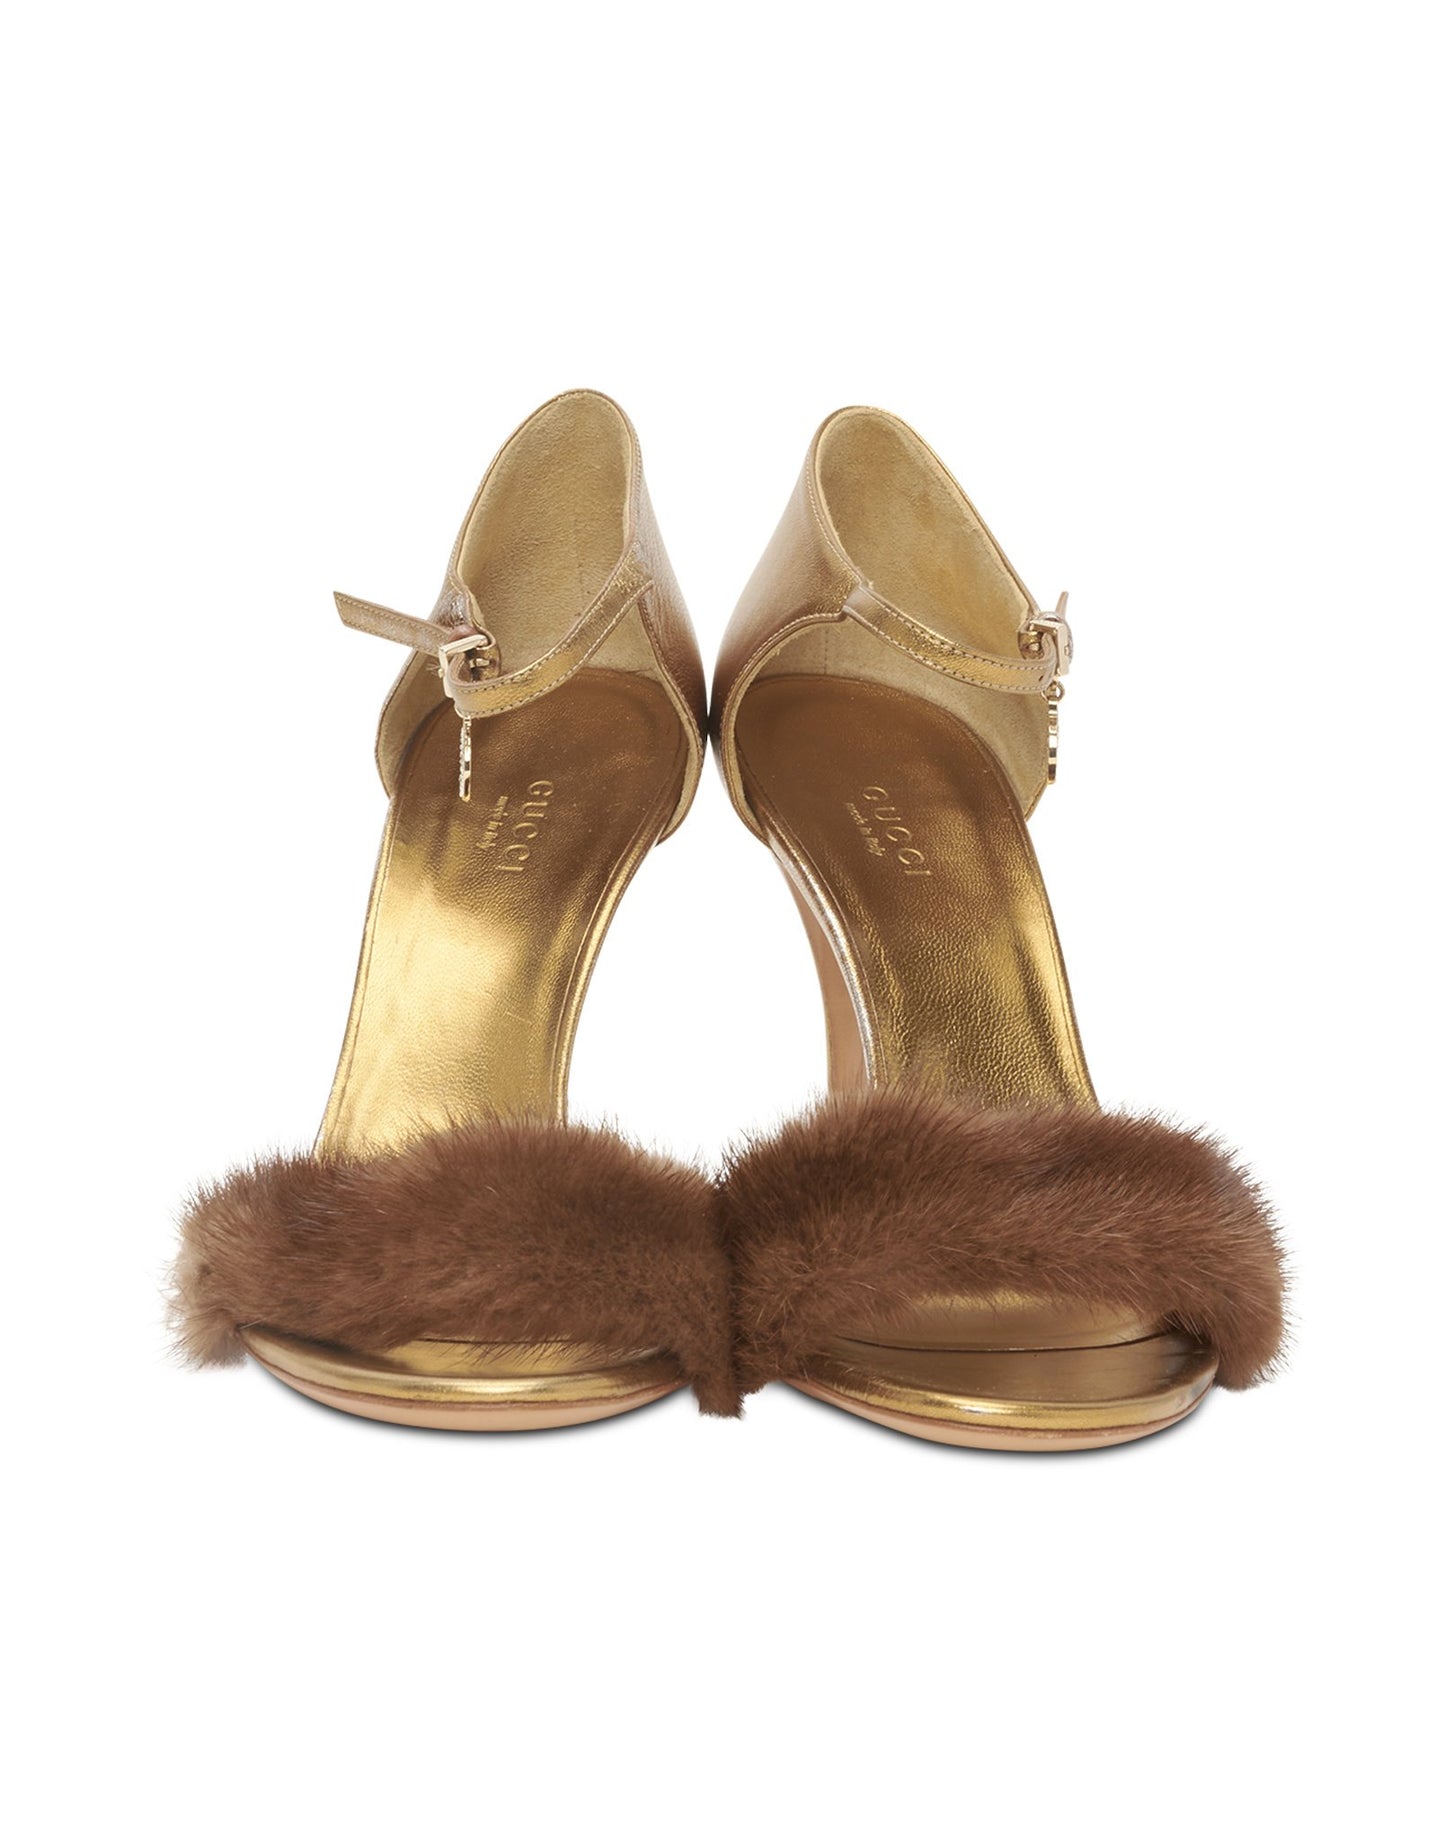 Gucci Gold "Tom Ford Era" Brown Fur Open Toe Heeled Sandals - 8.5B